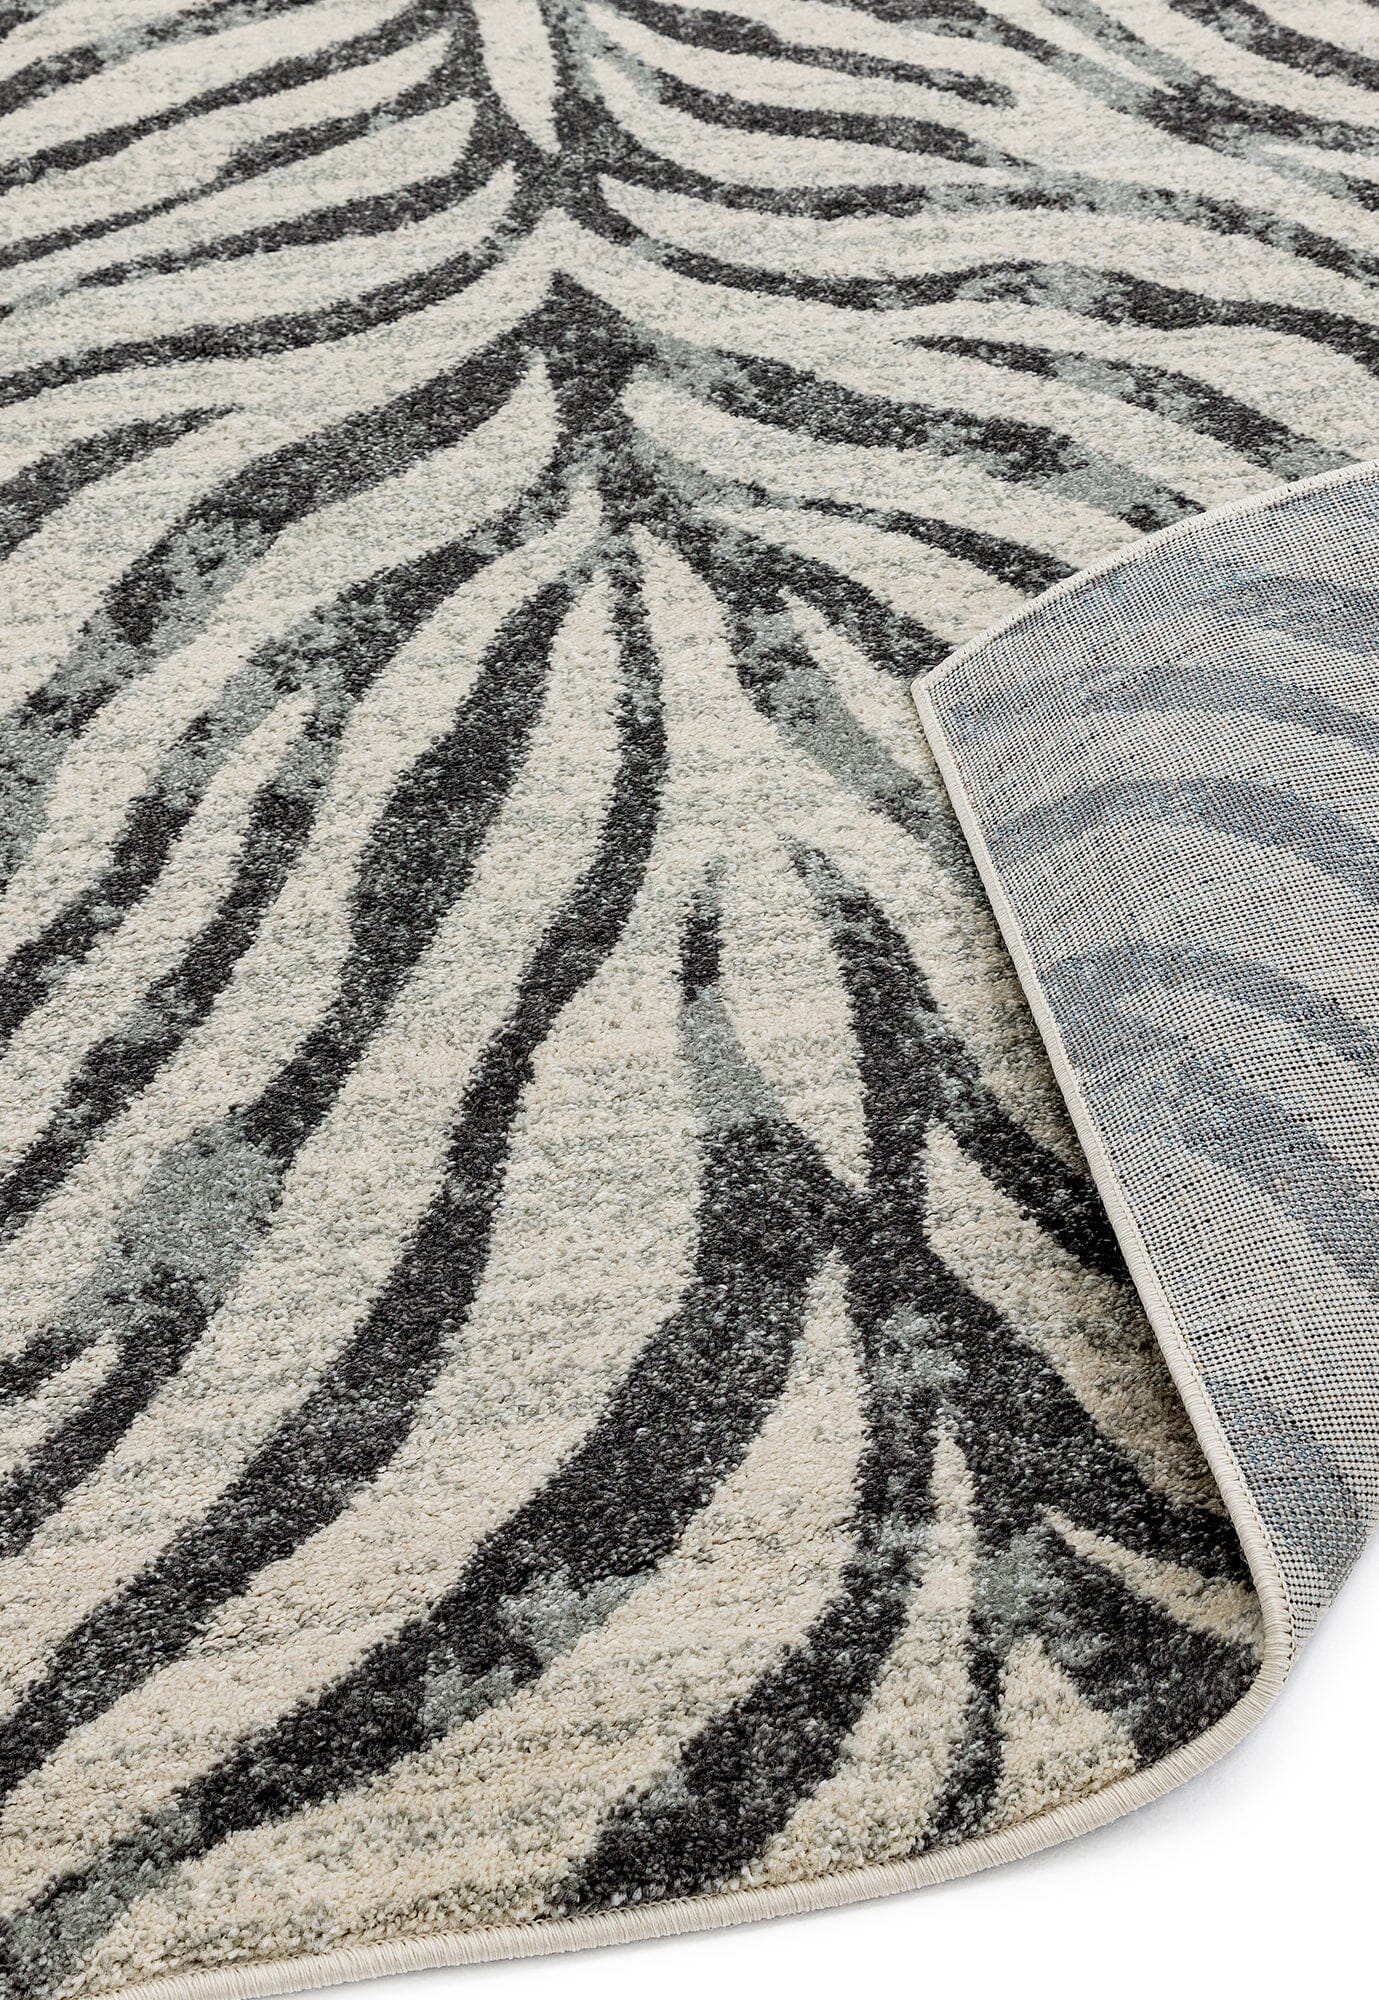 Asiatic Carpets Nova Machine Woven Rug Zebra Grey - 200 x 290cm